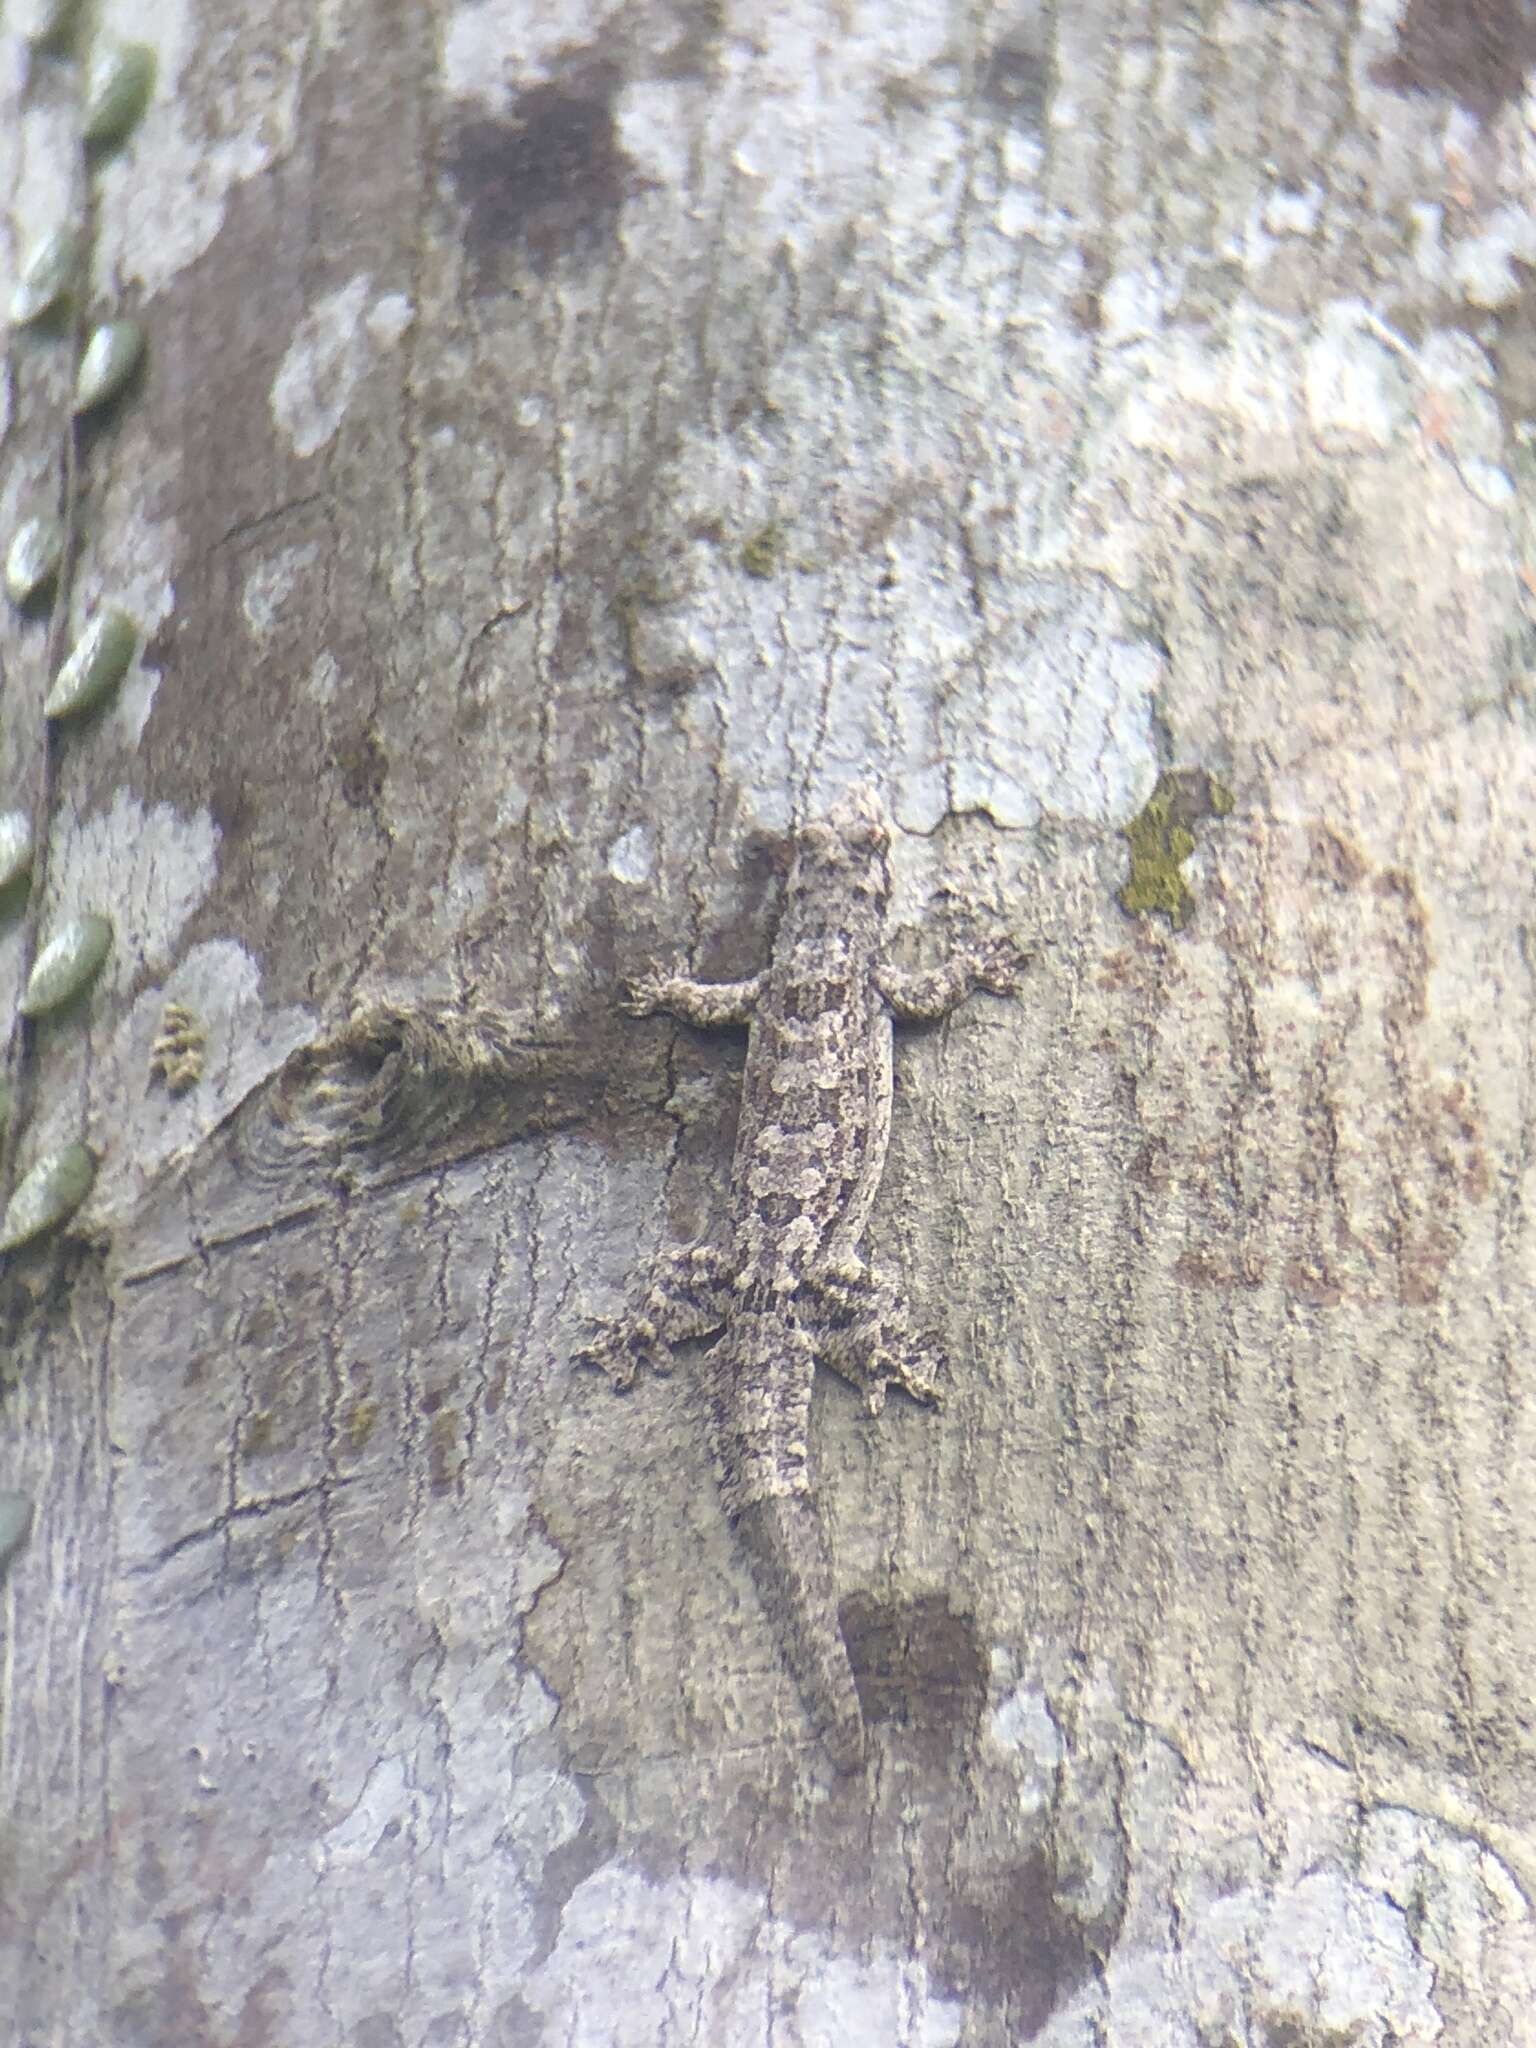 Image of Frilled Gecko